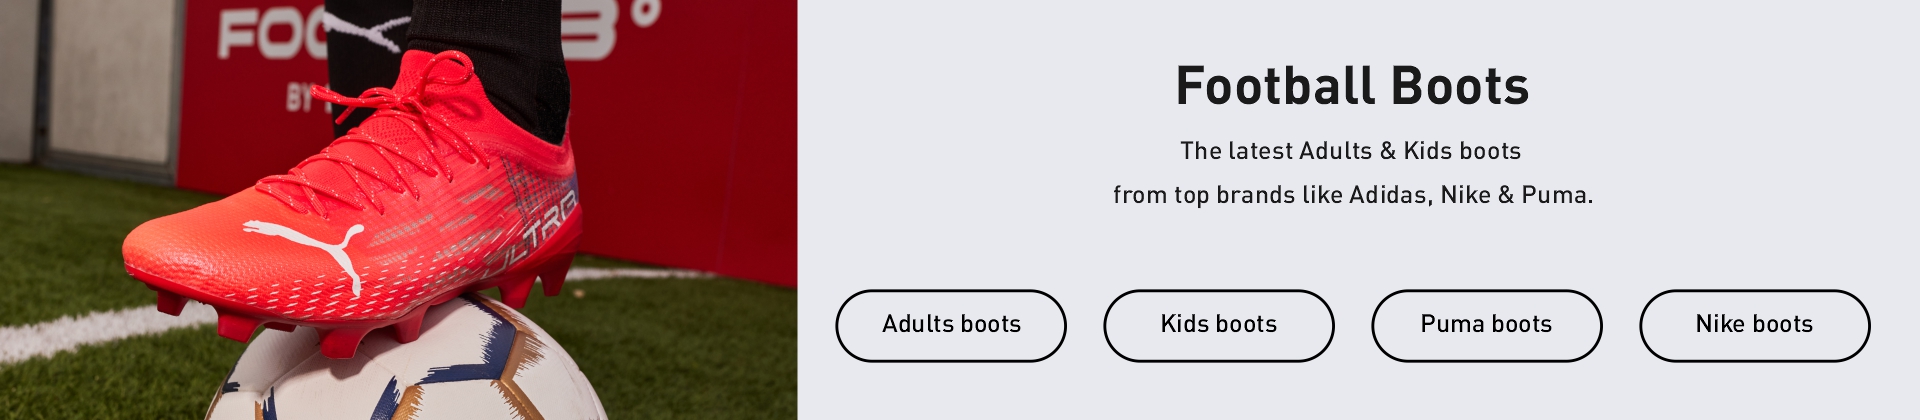 Elverys_BTS2021_Football_Boots_Image_Map.jpg